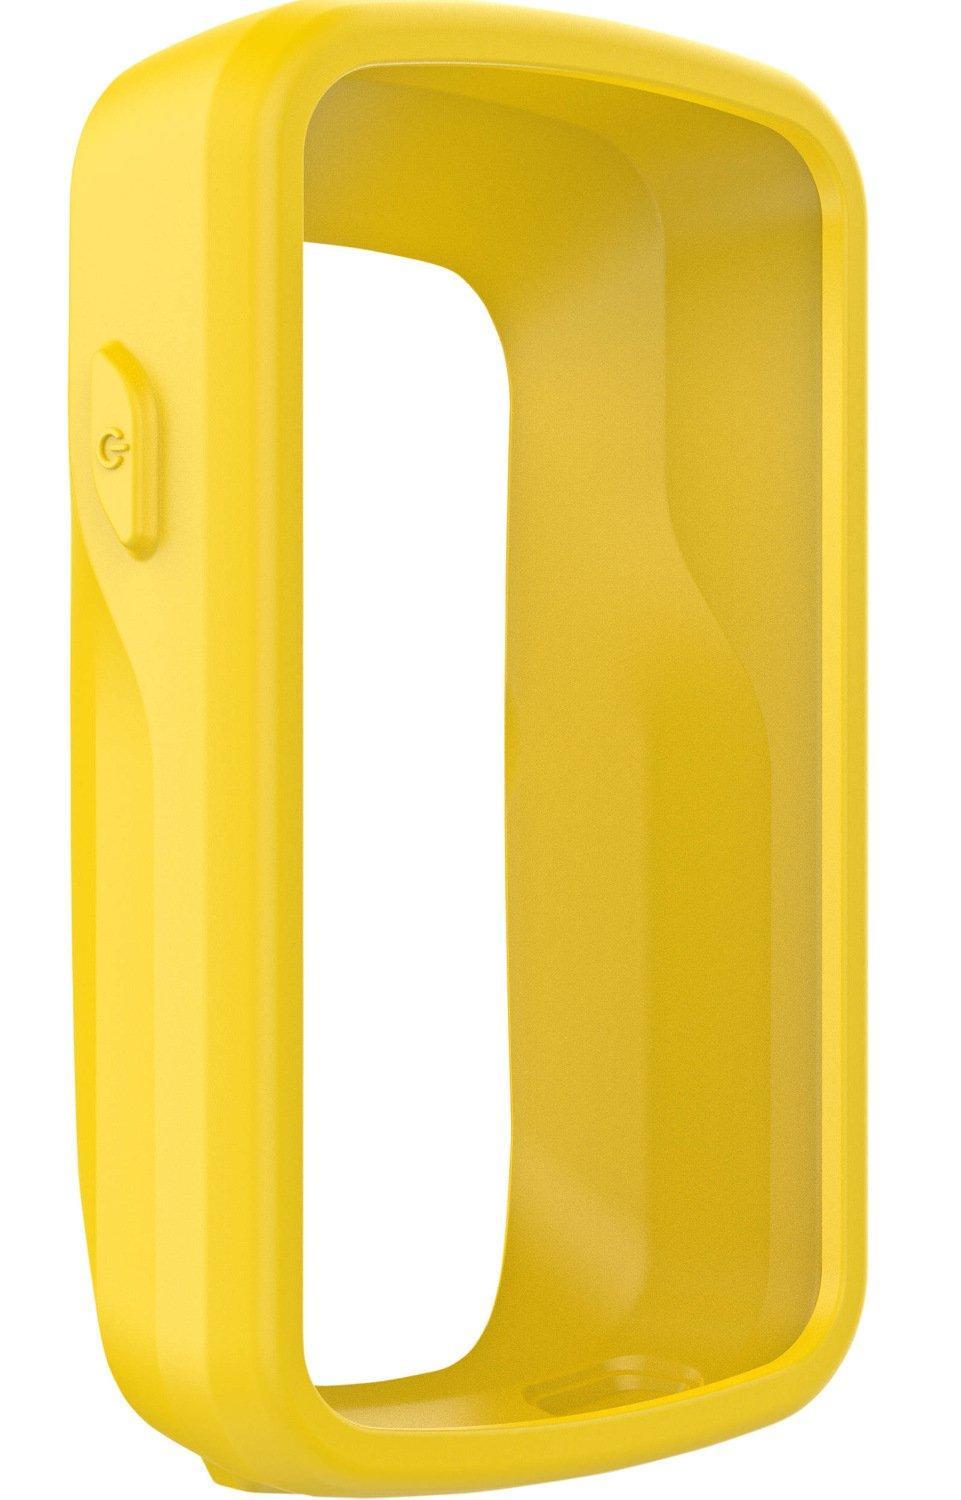 Garmin Edge 820 Silicone Case - Yellow